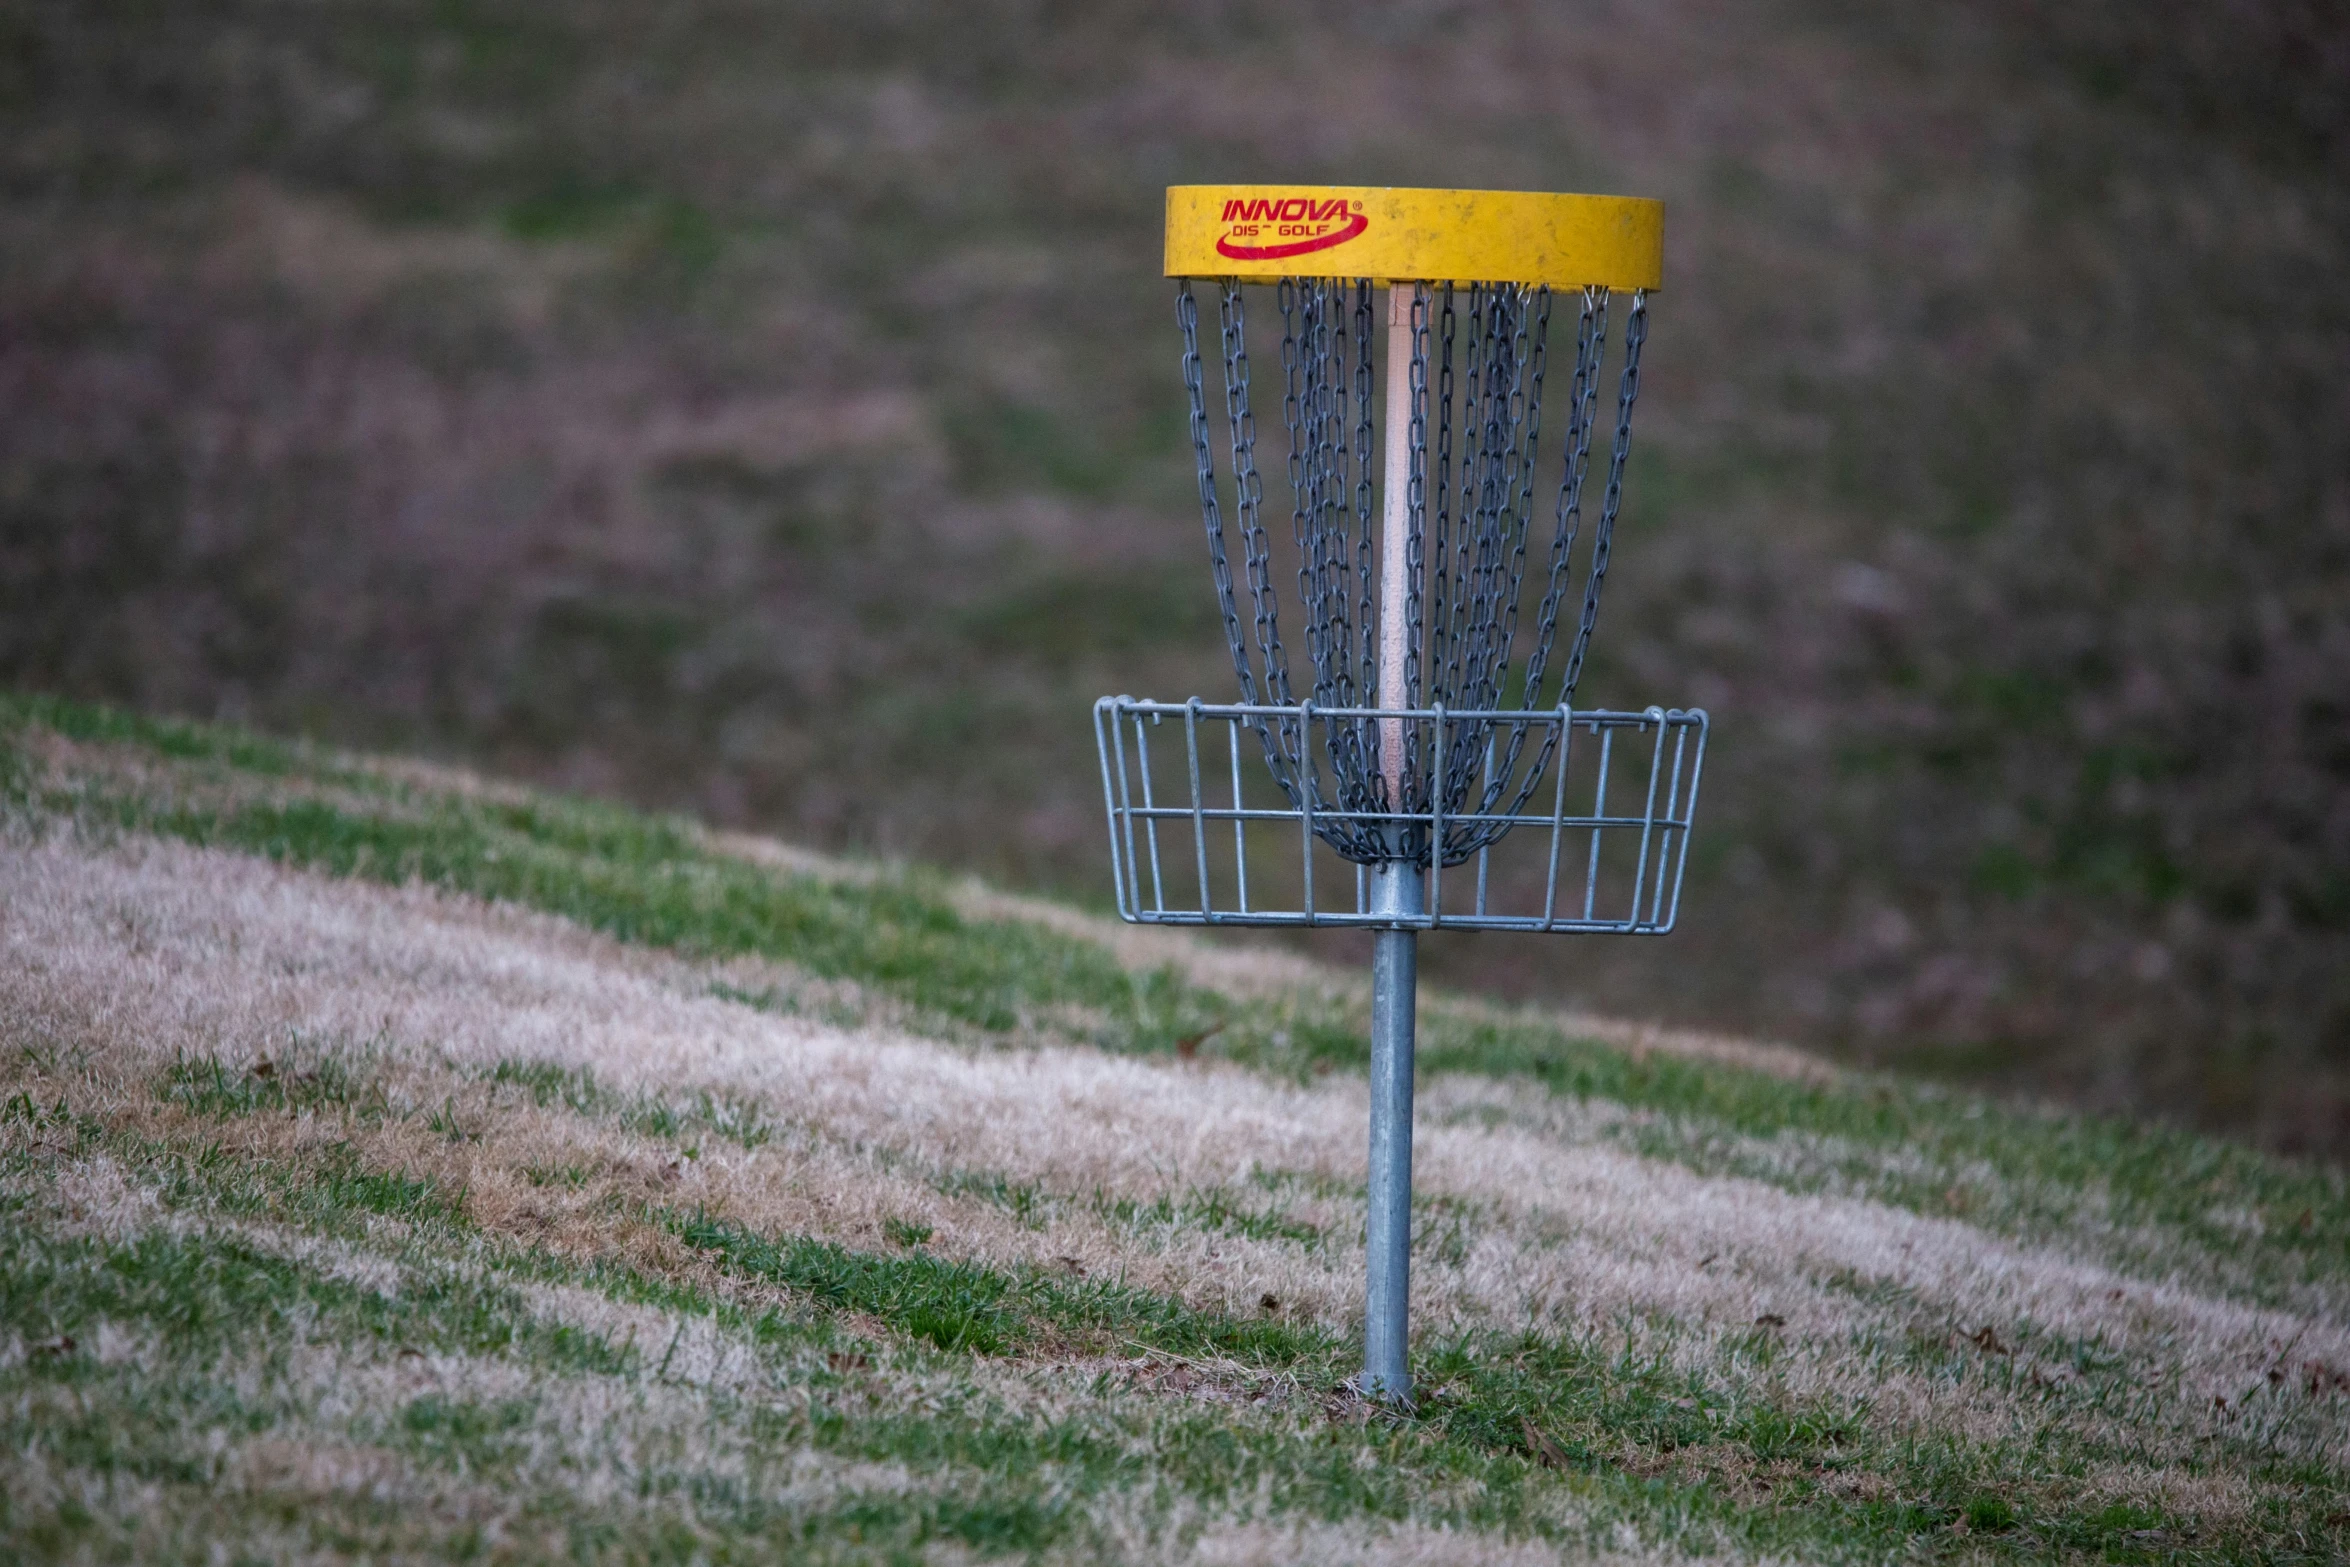 a frisbee golf basket on the green grass